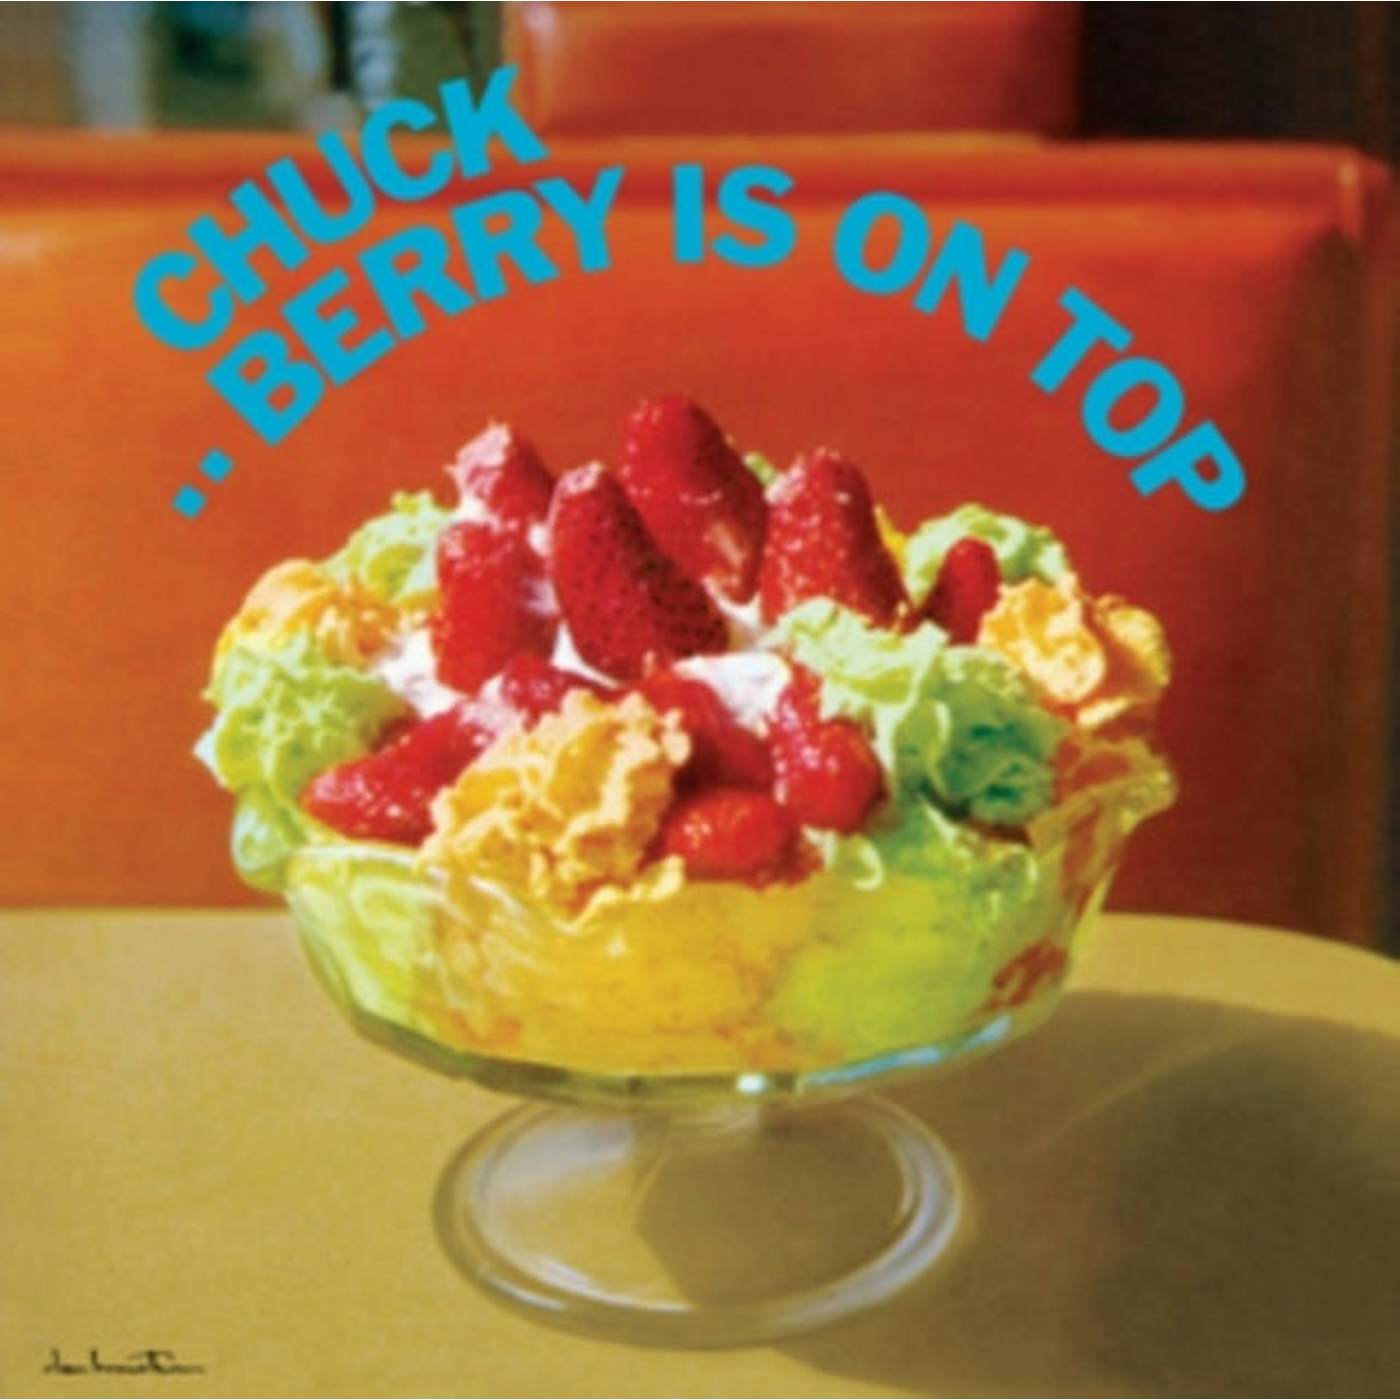 Chuck Berry LP Vinyl Record - Berry Is On Top (+2 Bonus Tracks) (Solid Green Vinyl)